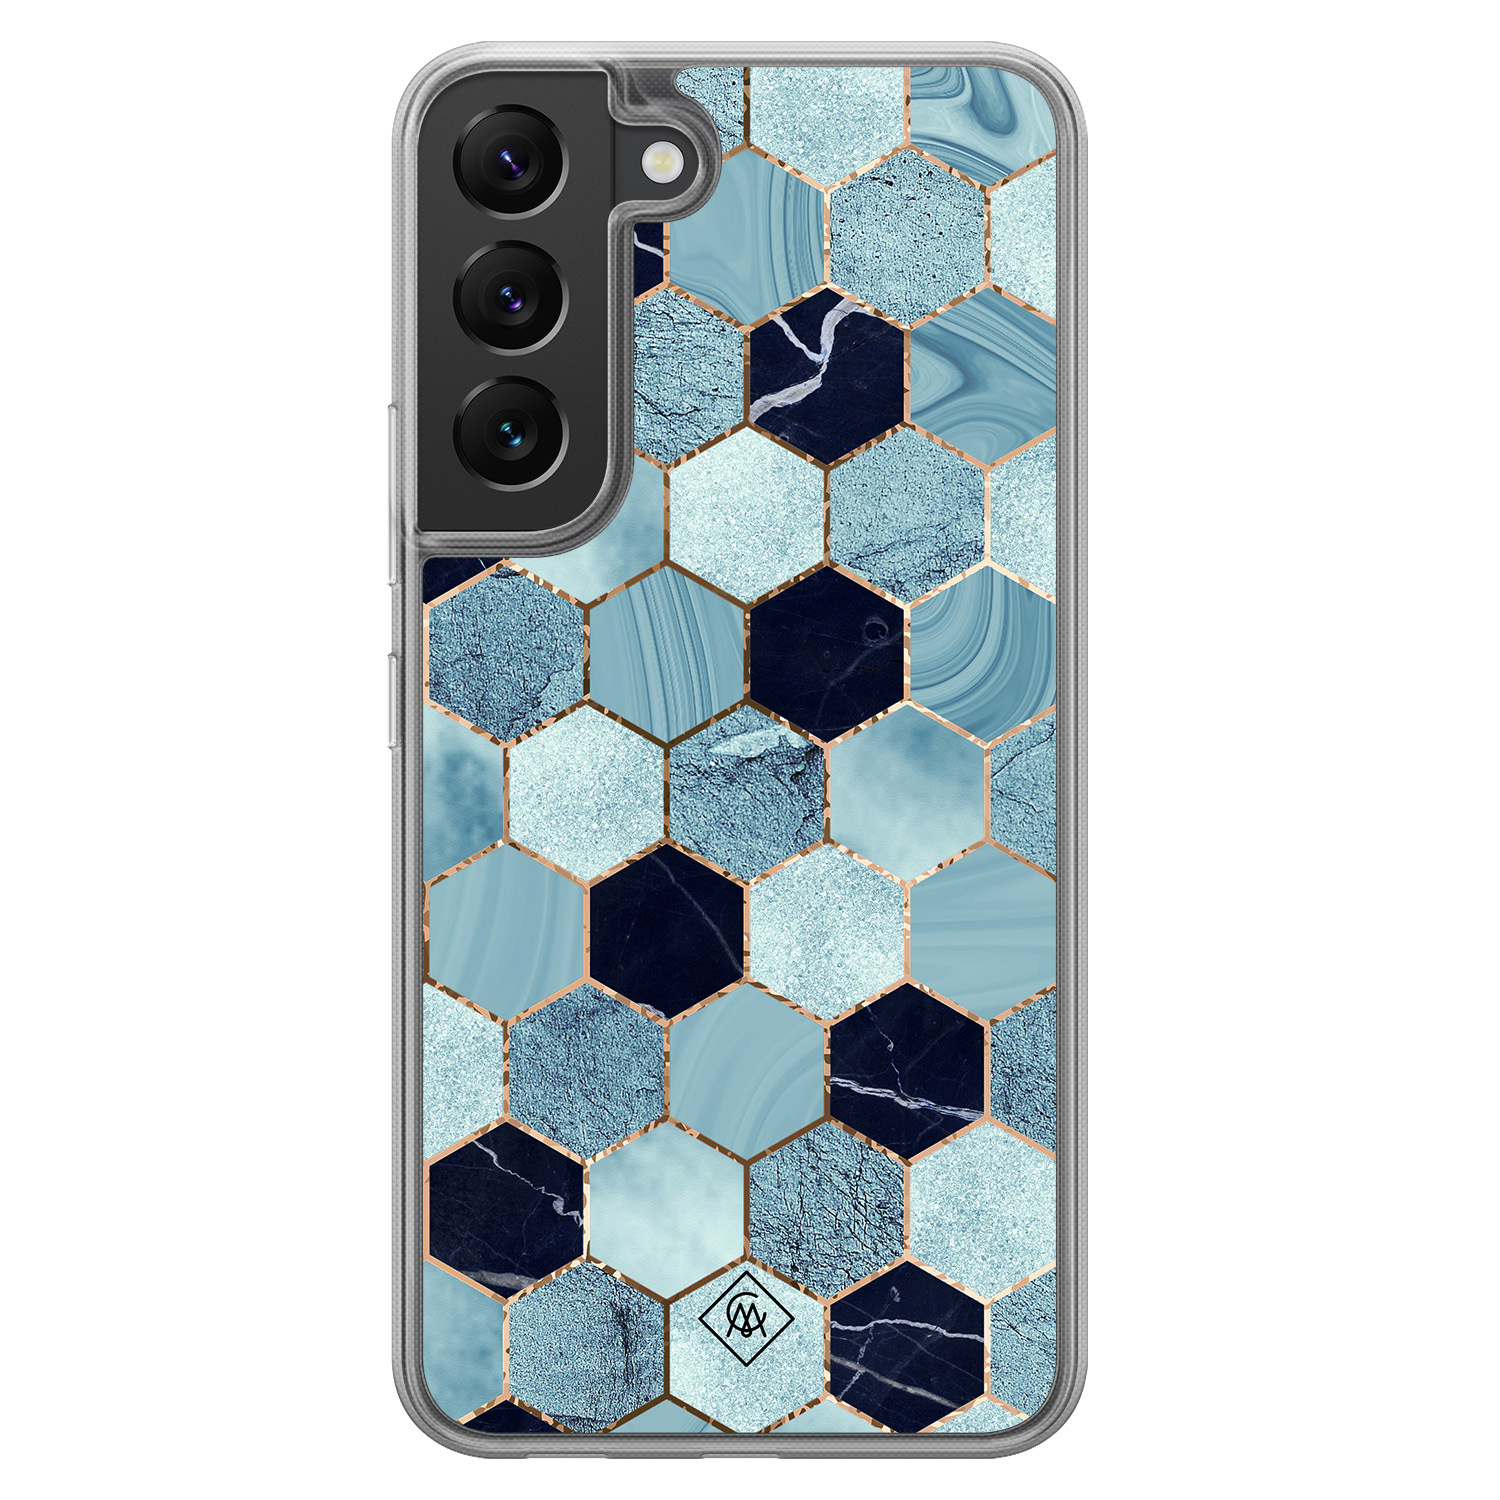 Samsung Galaxy S22 hoesje siliconen - Blue cubes - Casimoda® 2-in-1 case hybride - Schokbestendig - Marble design - Verhoogde randen - Blauw, Transparant